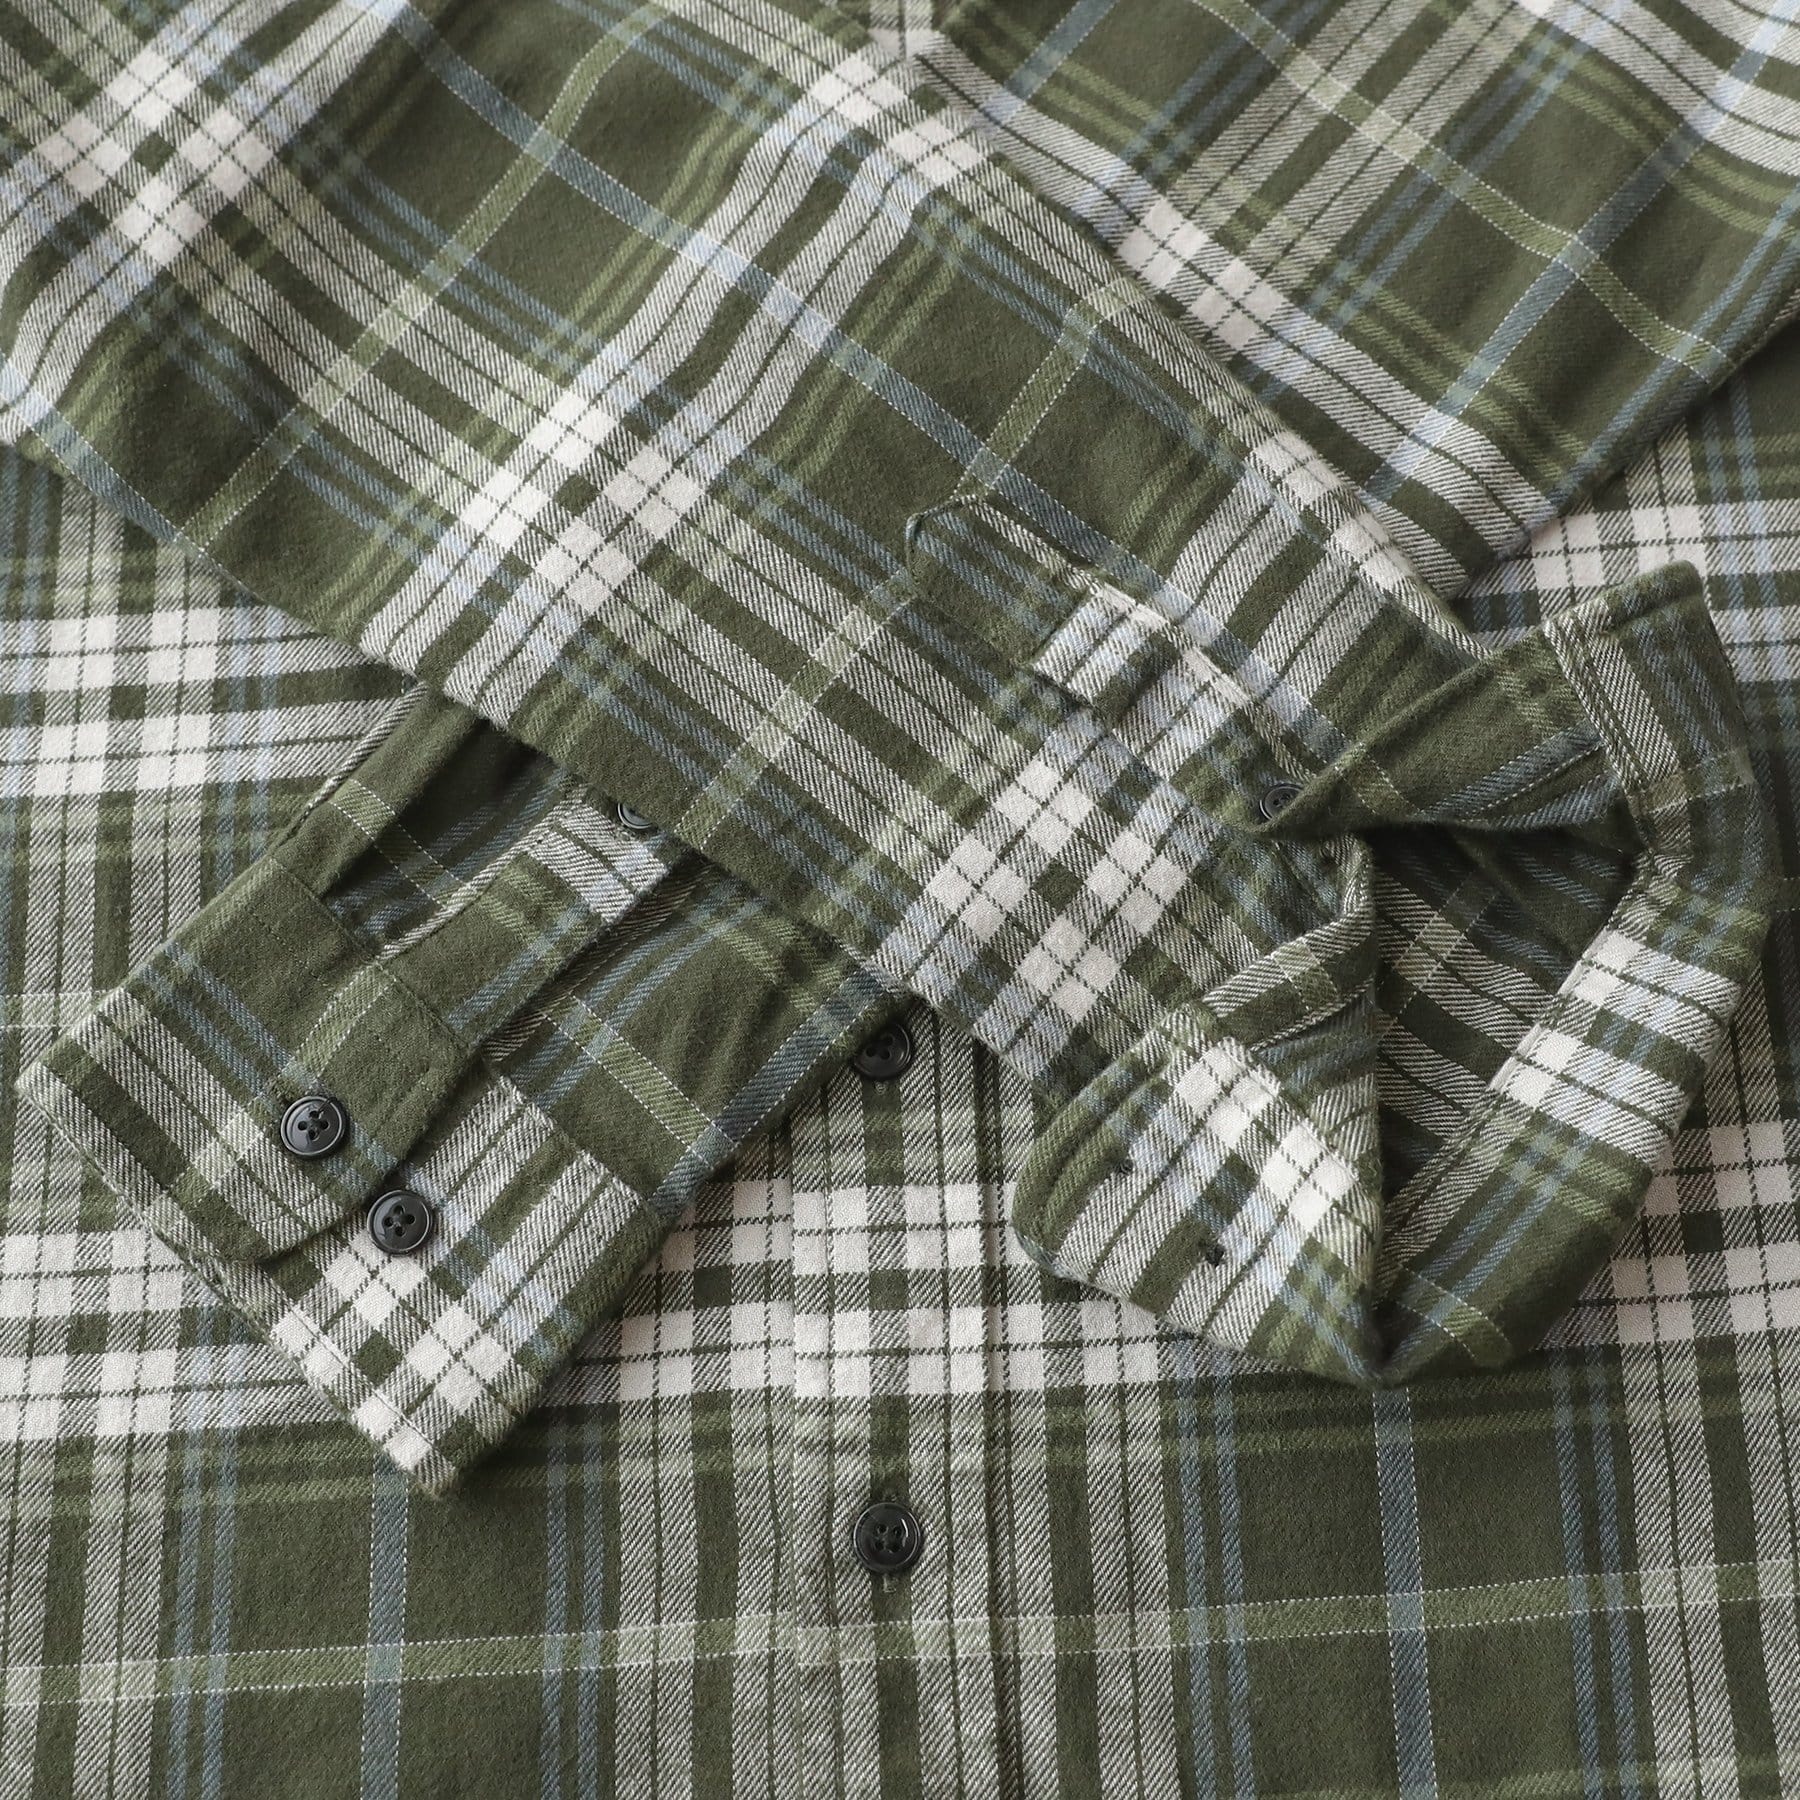 Men's Plaid Flannel Long Sleeve Shirts #0318